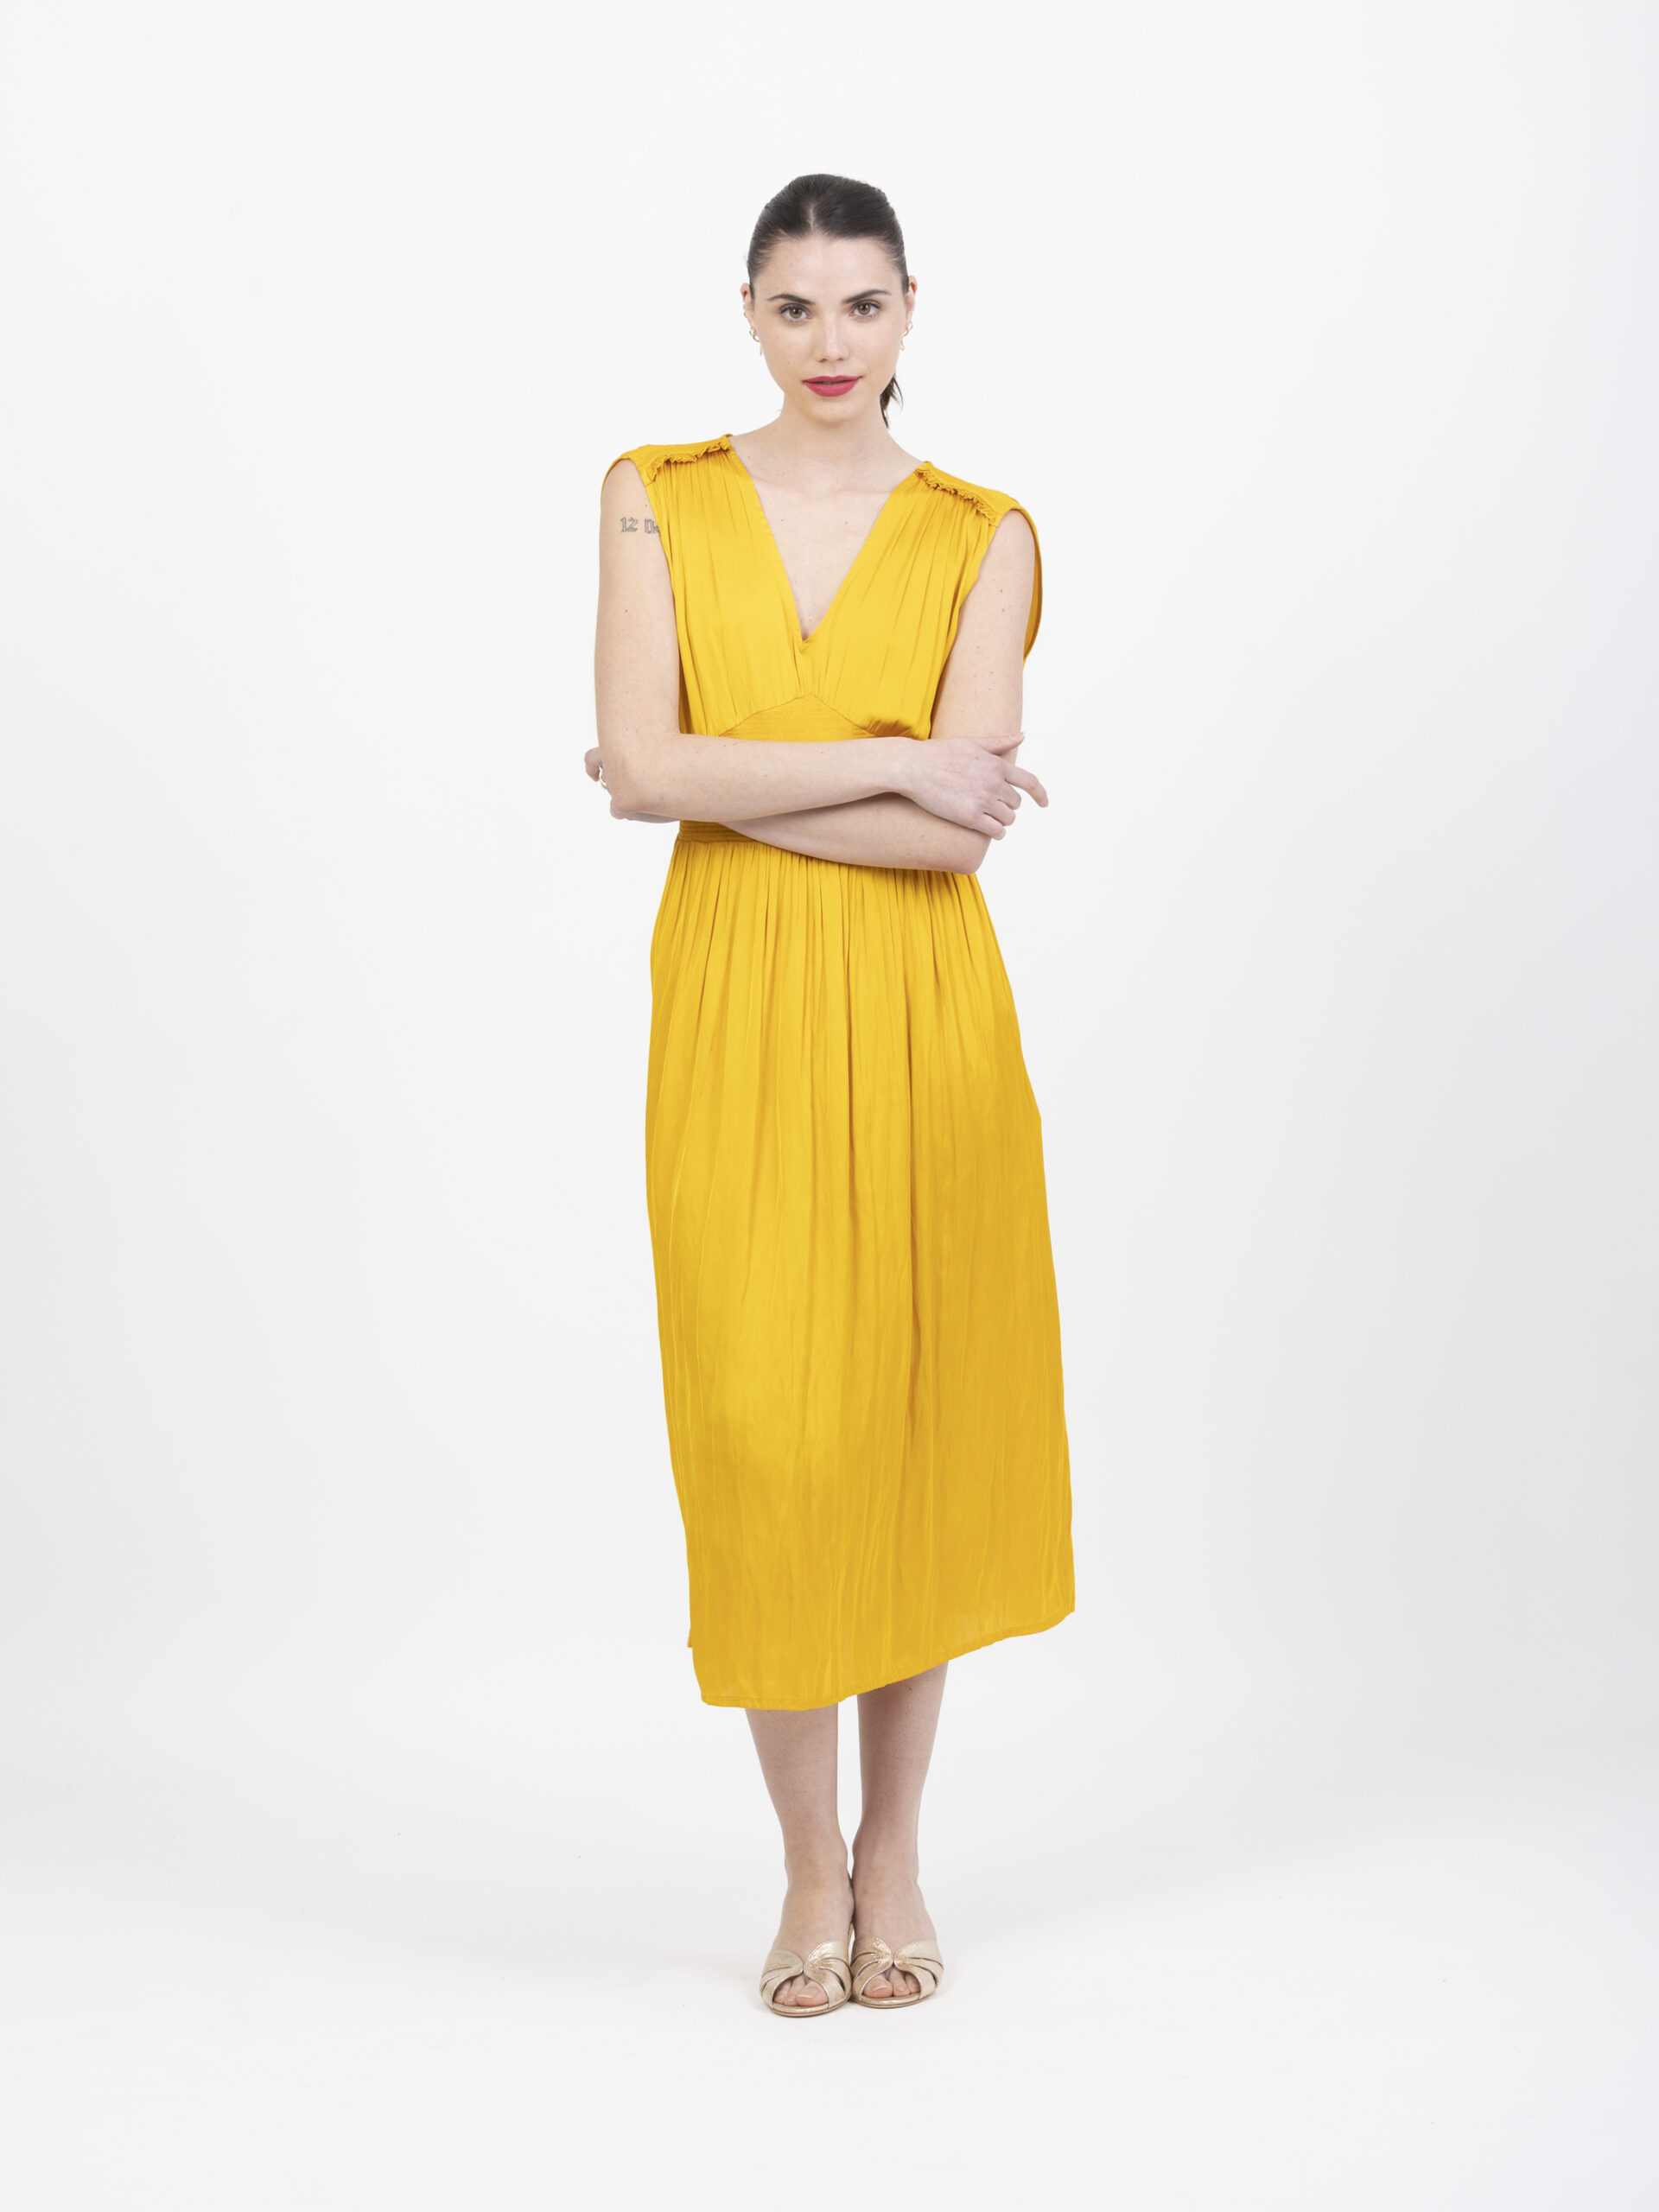 lavinia-yellow-sunny-dress-midi-sessun-matchboxathens-athens-shop-online-buy-athens